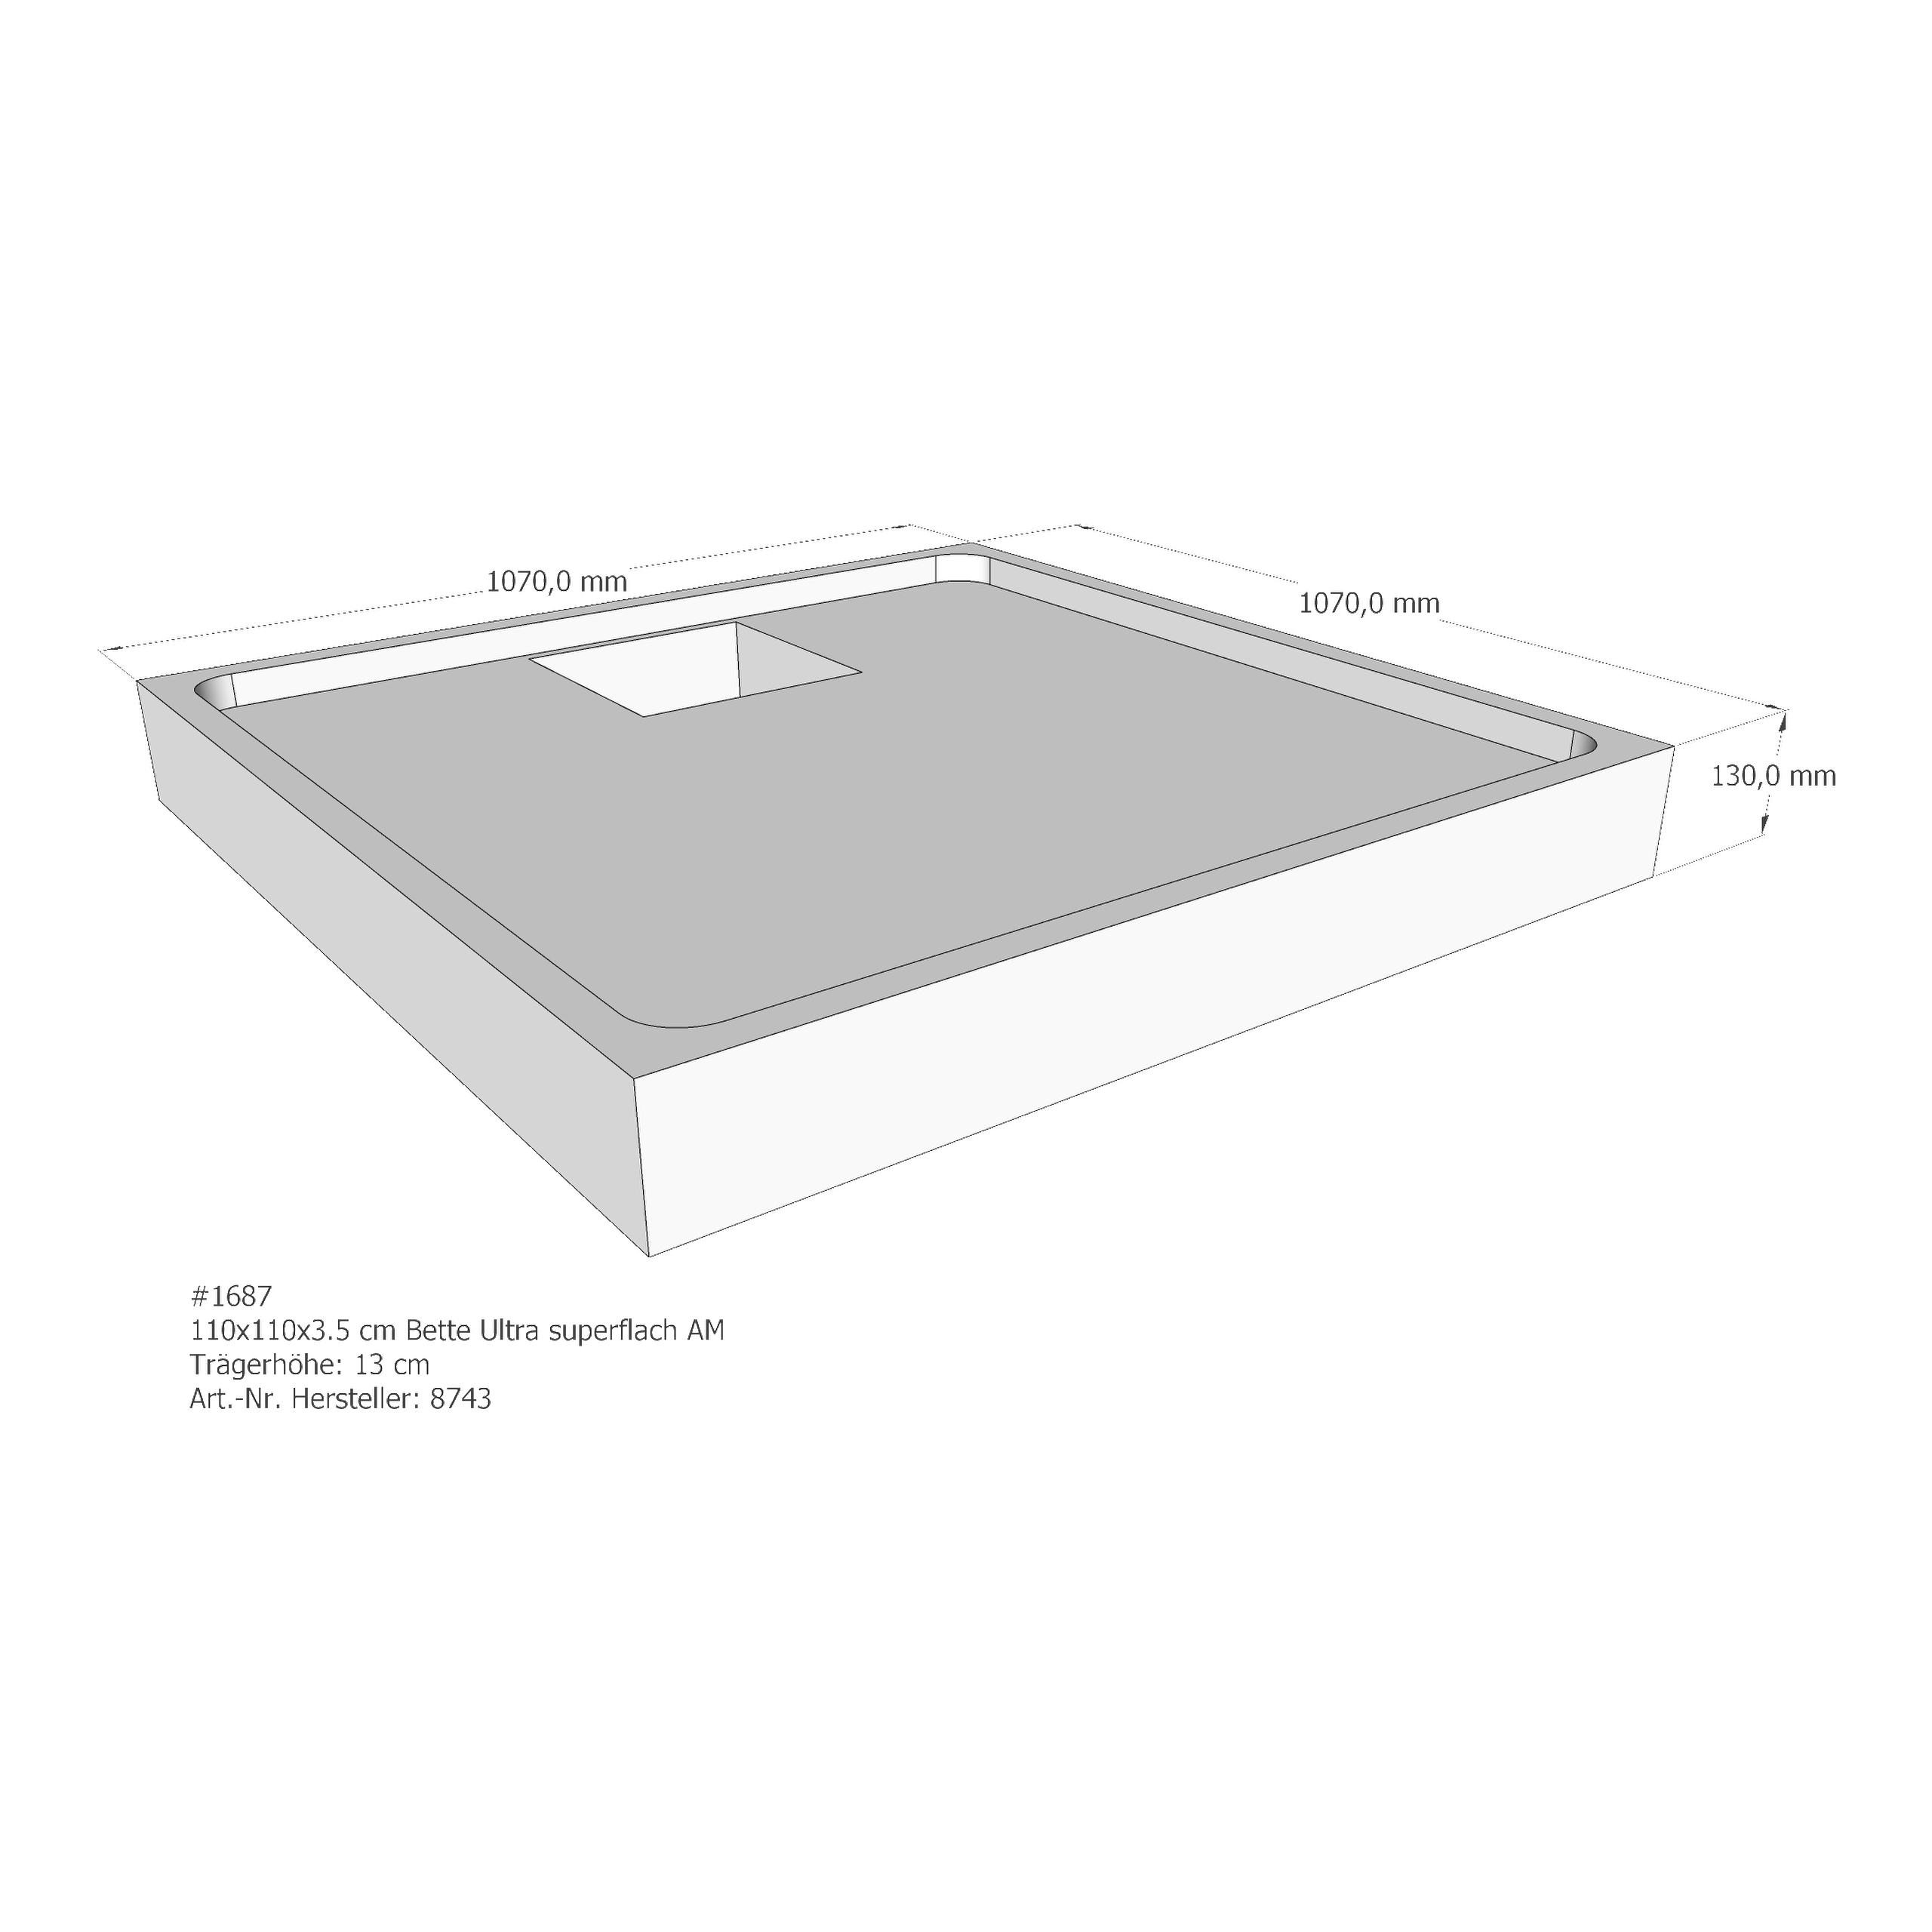 Duschwannenträger für Bette BetteUltra (superflach) 110 × 110 × 3,5 cm